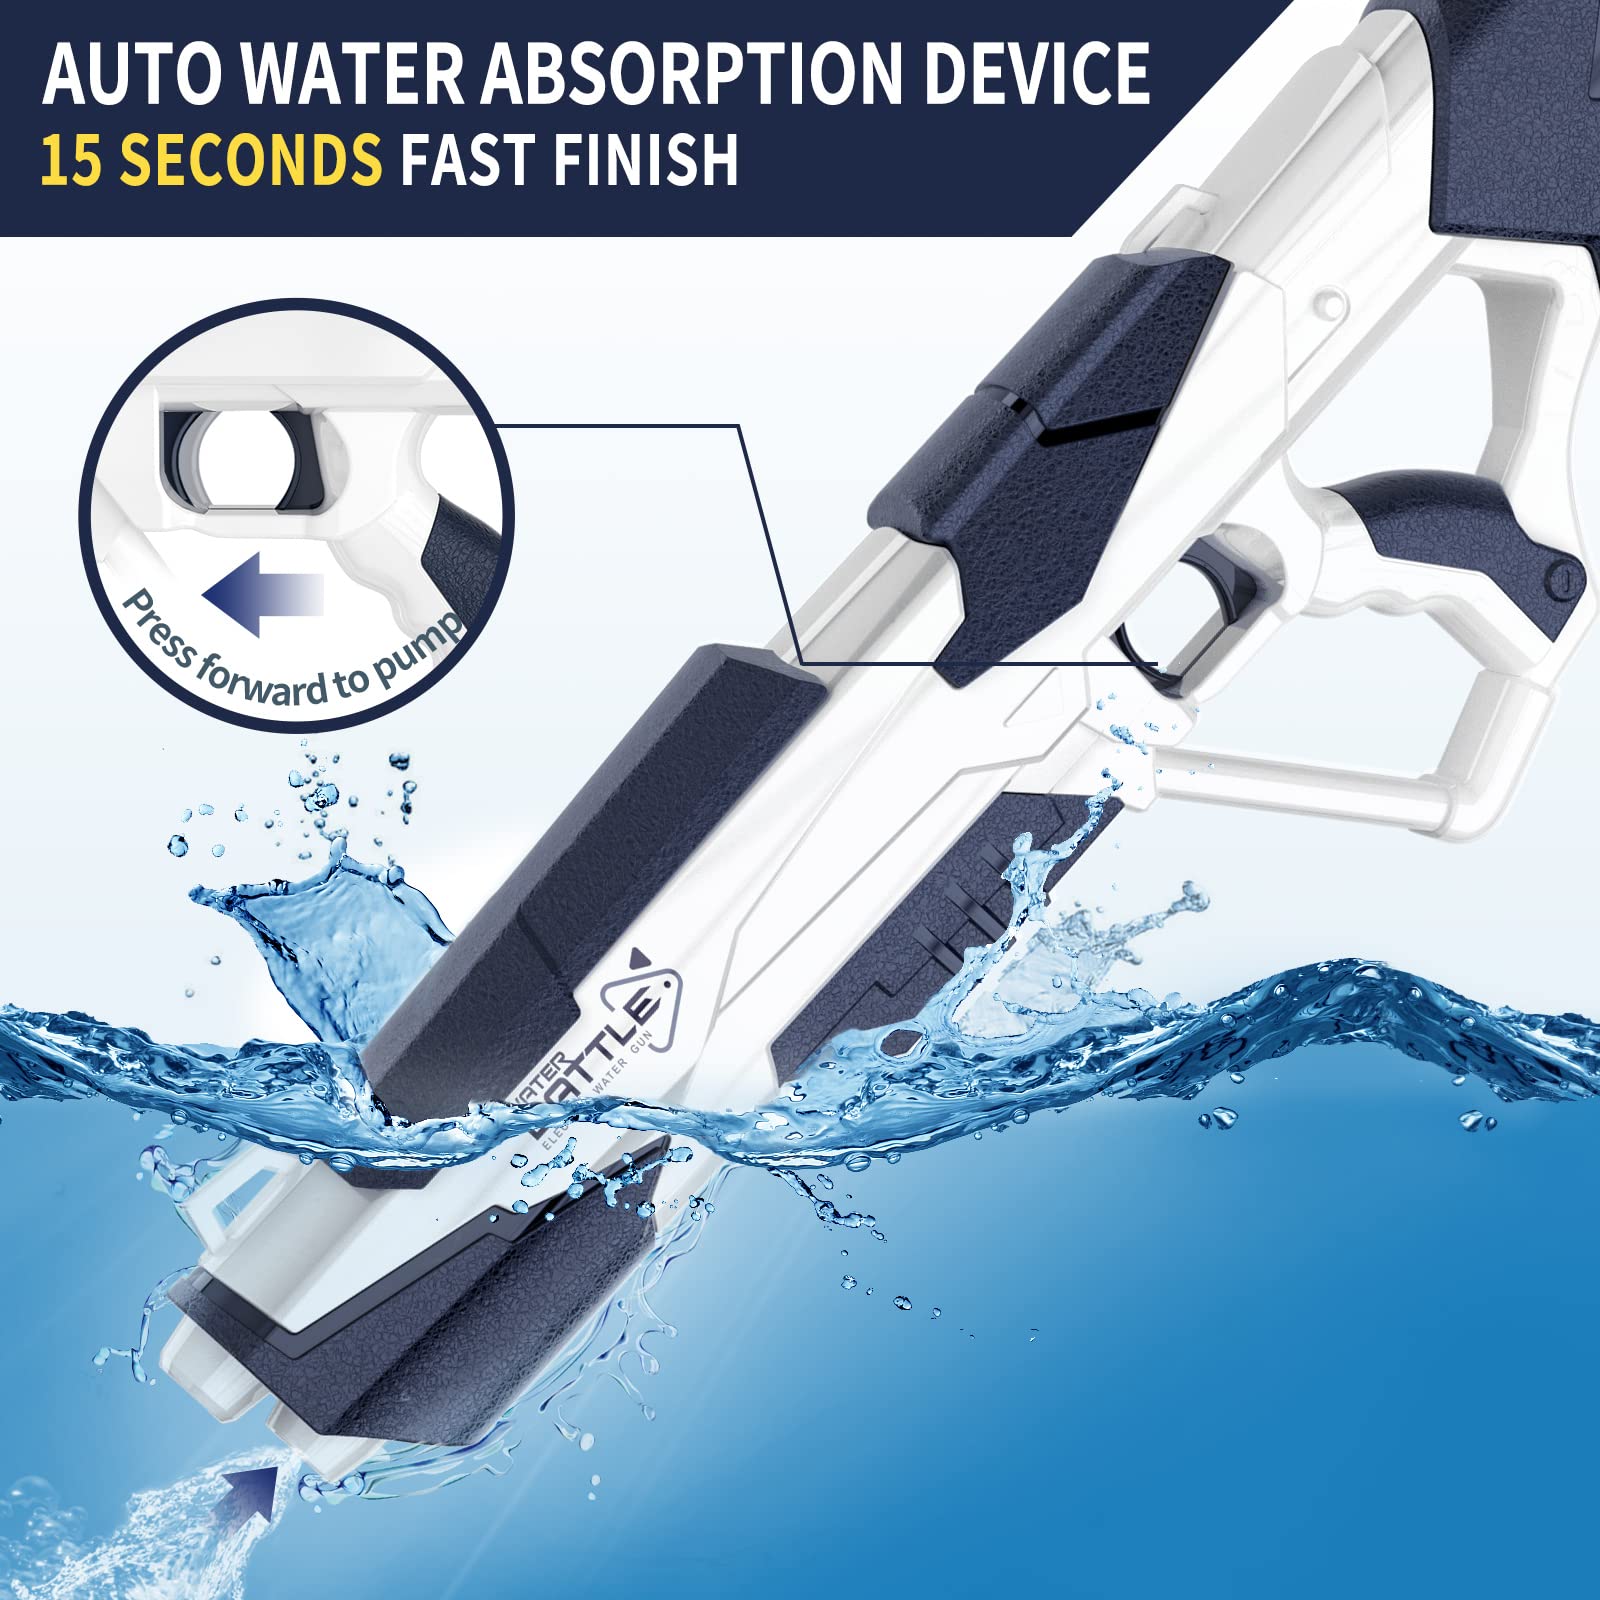 Bodinator water gun - DadBod Summer Water Gun Blater 